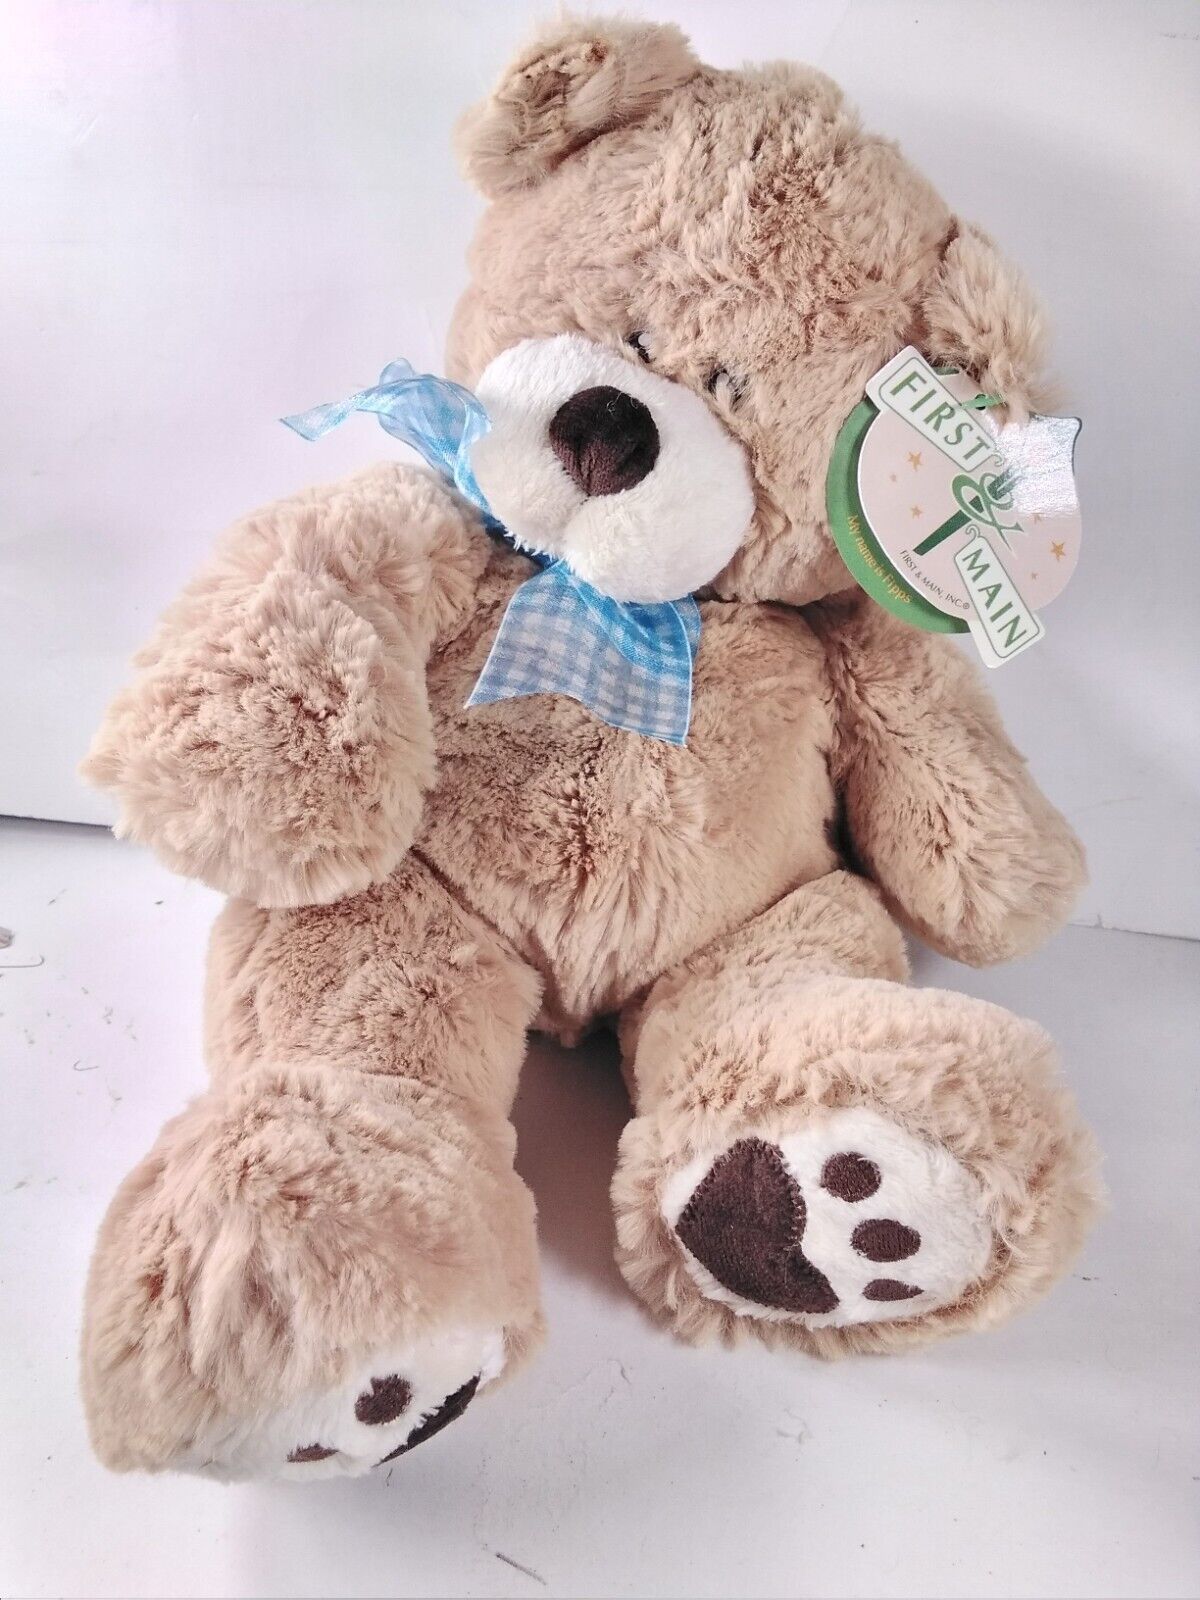 Fipps First & Main Light Brown 9" Plush Stuffed Animal Bear 2004 - $9.75